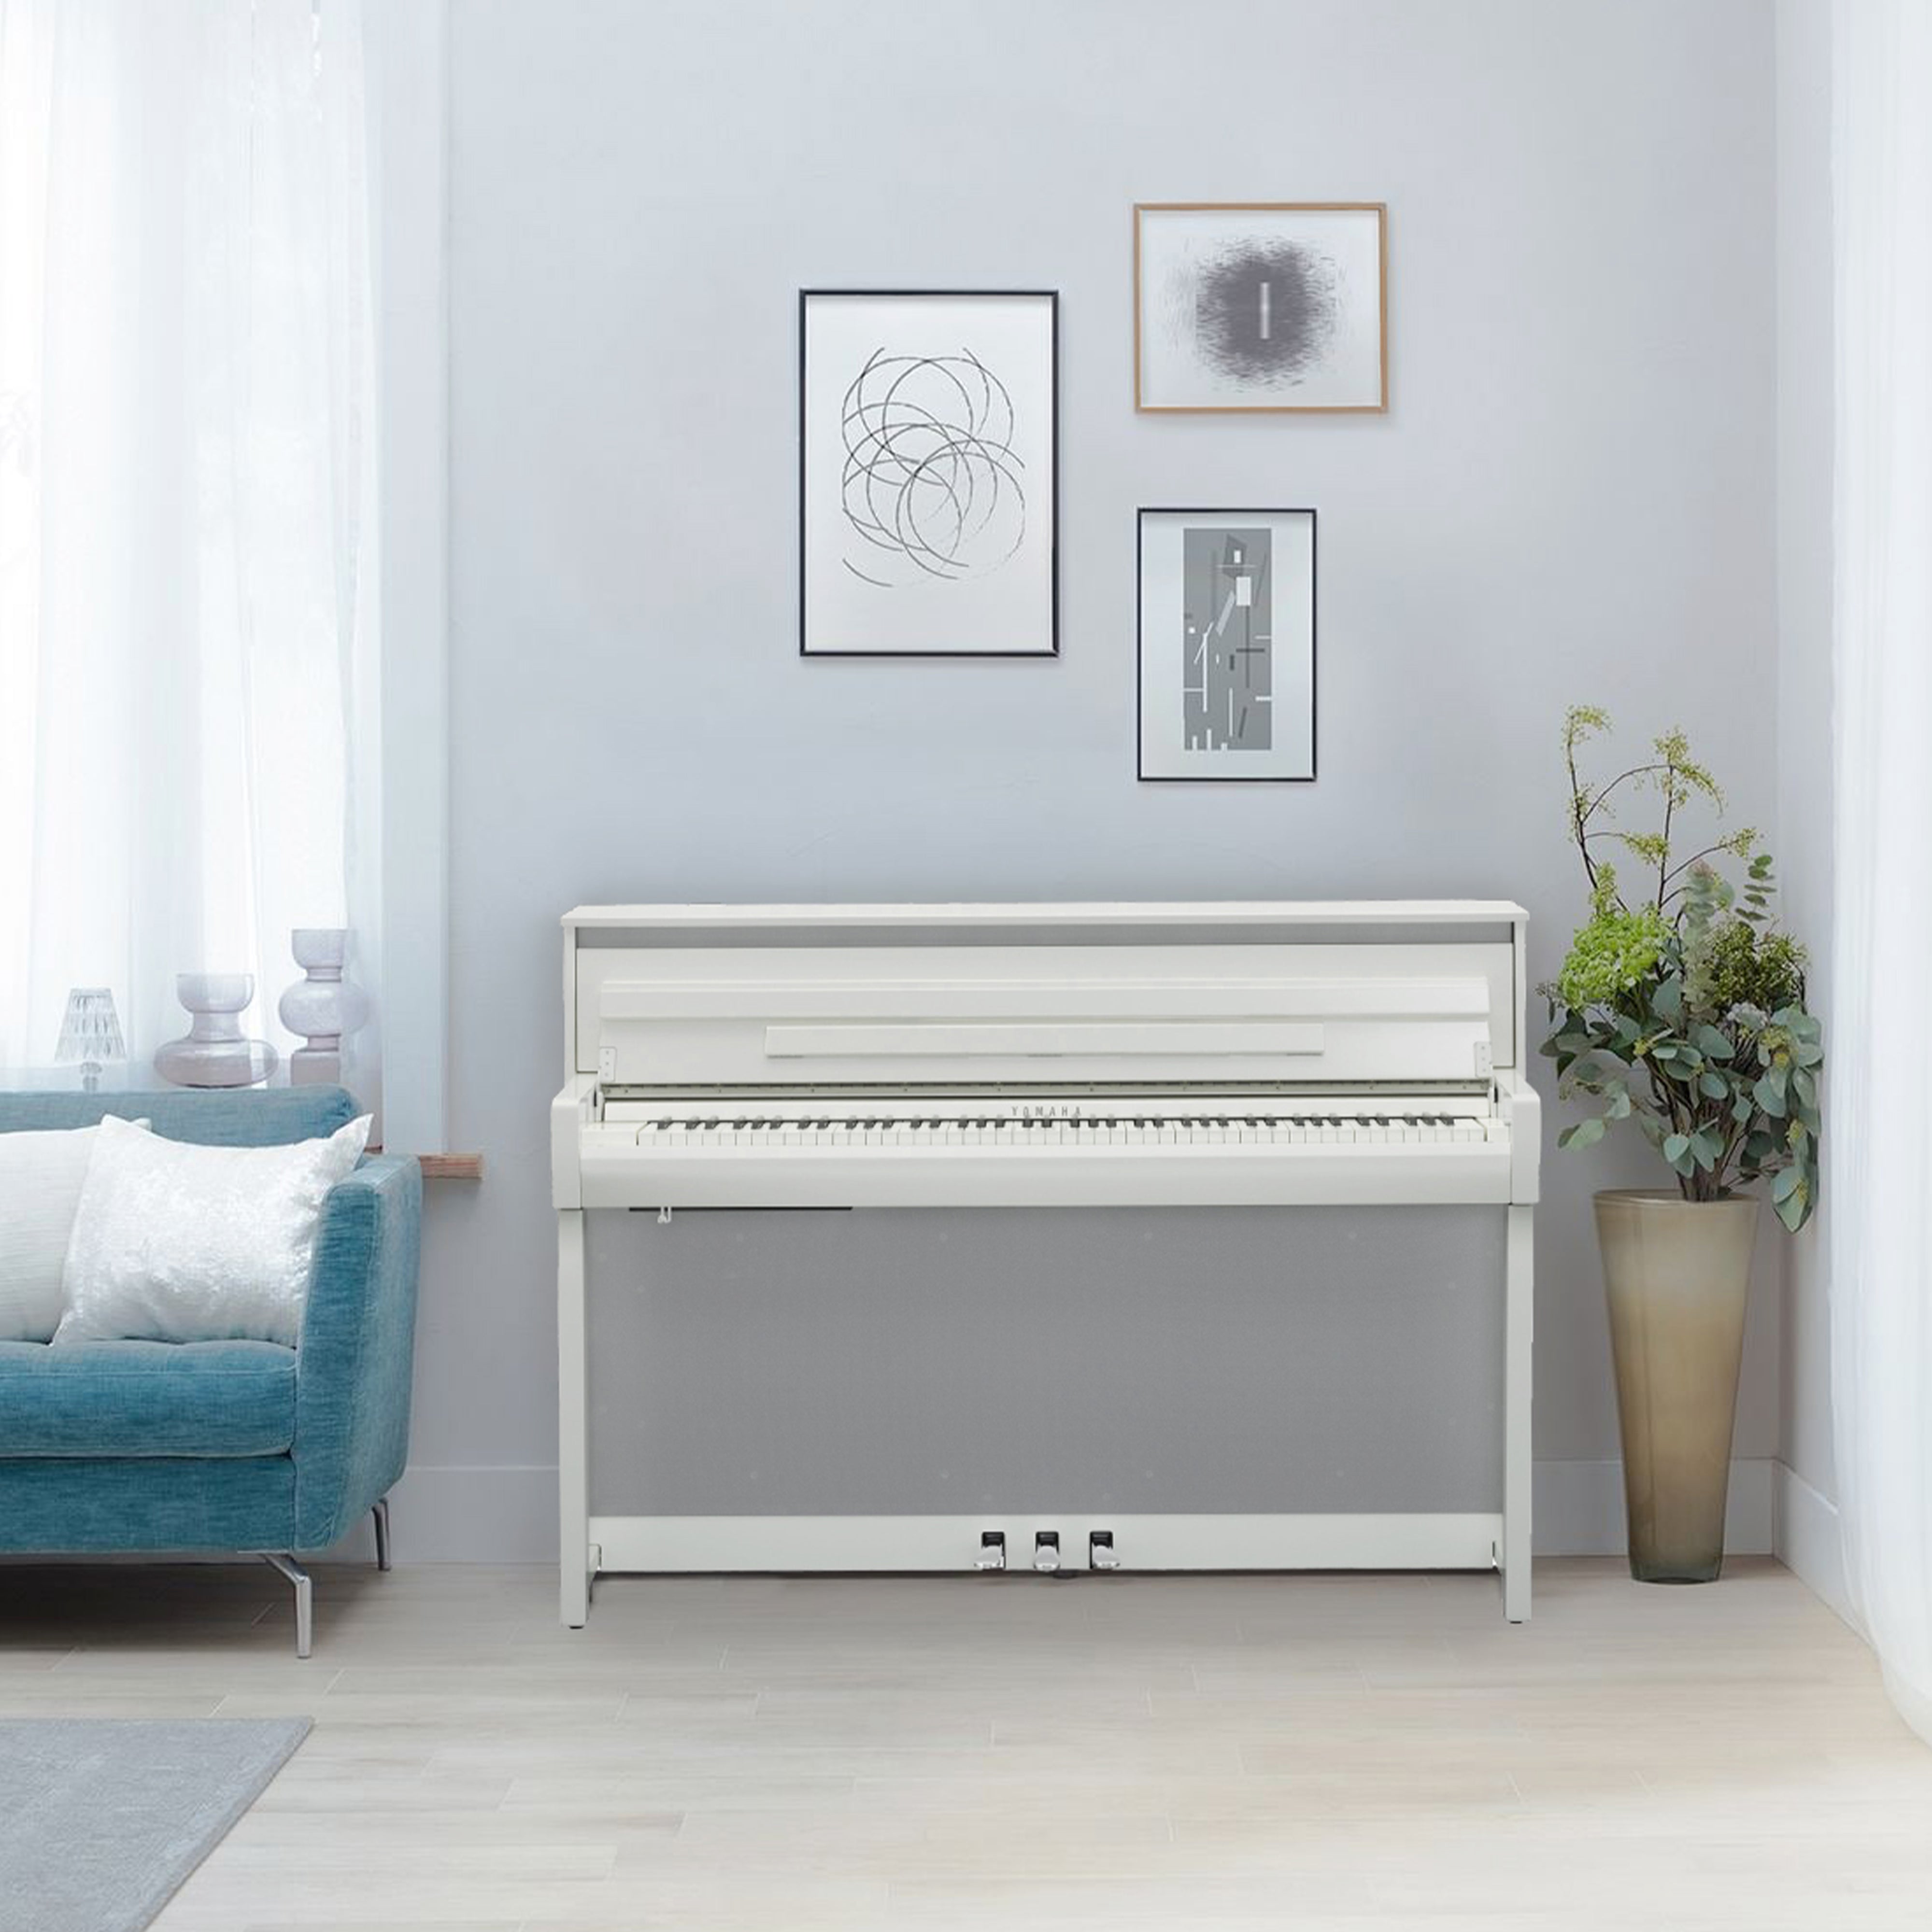 Yamaha Clavinova CLP-785 Digital Piano - Polished White - in a bright contemporary living room